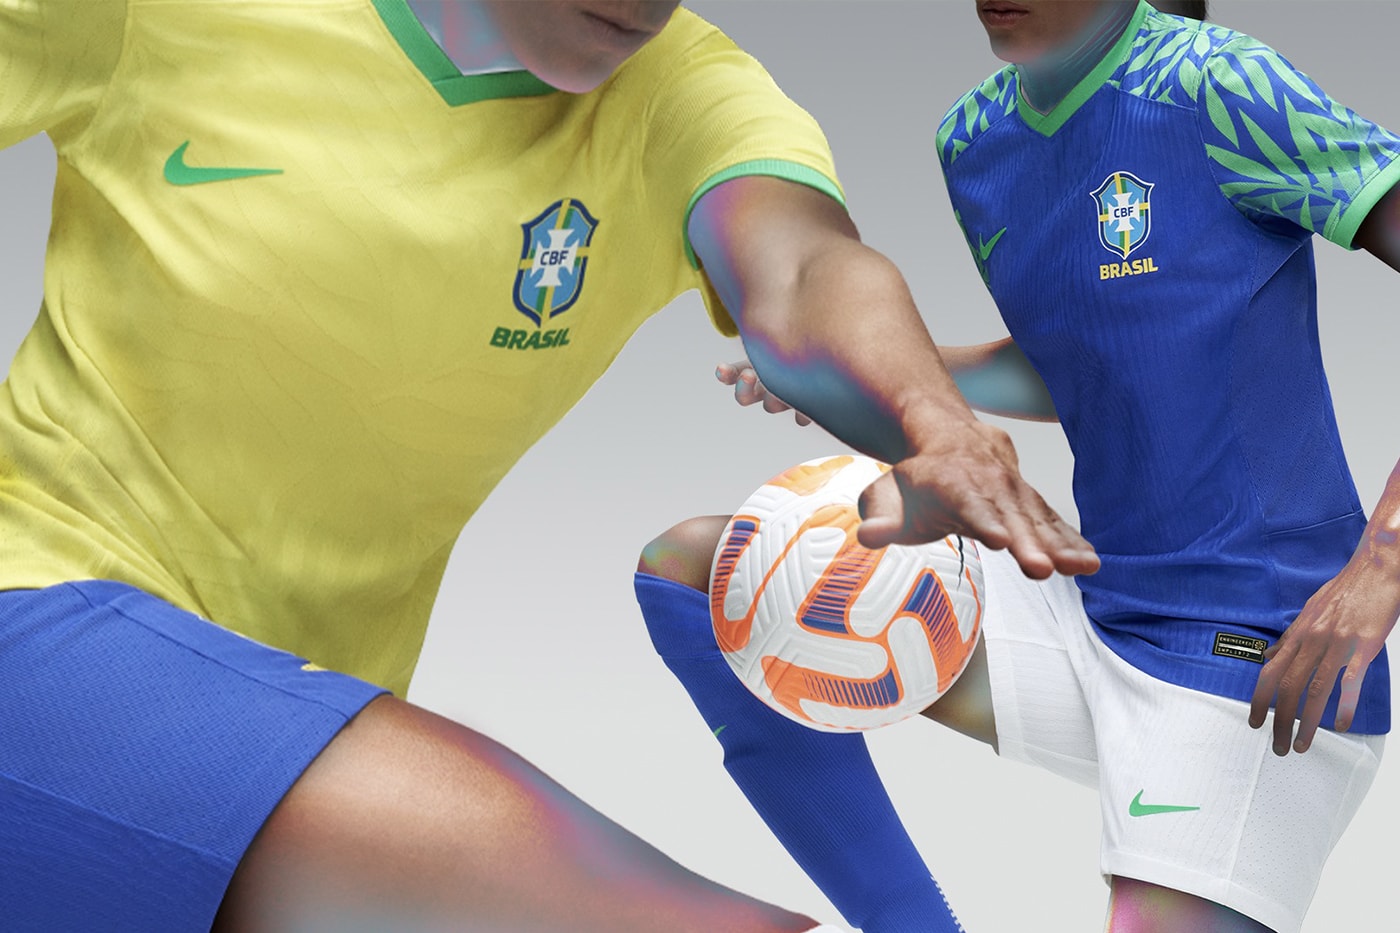 nike women's football 2023 kits collection jerseys shorts soccer female athletes sportswear